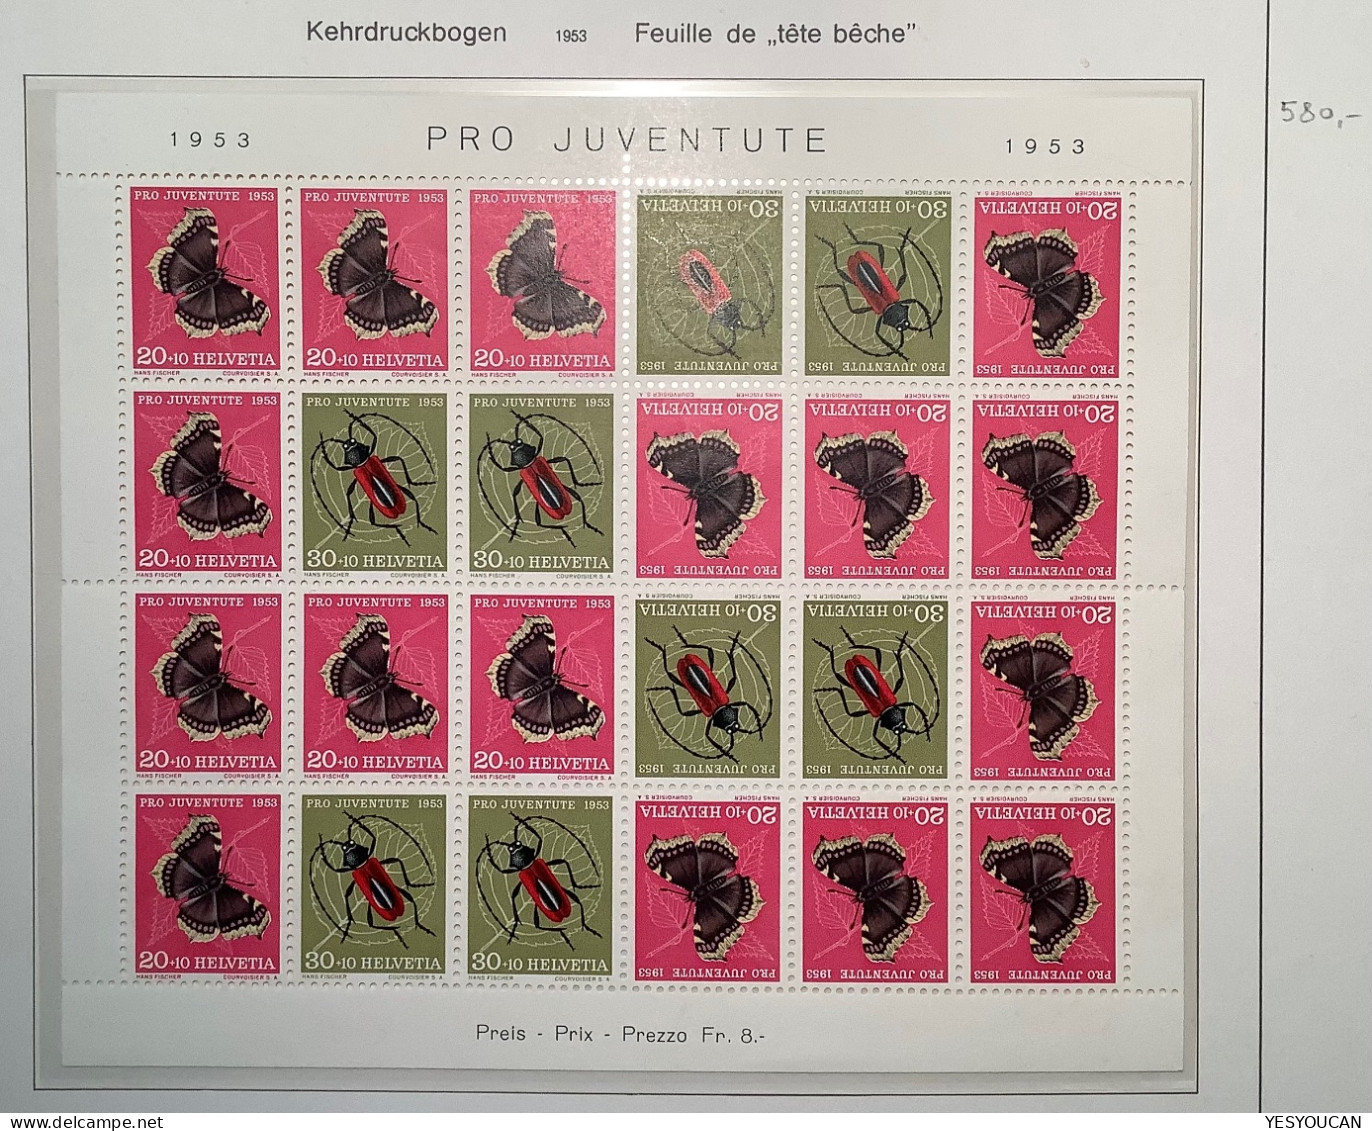 Pro Juventute 1953 ZNr JOZ41 MNH**Kehrdruckbogen (S/S Schweiz Feuille Tête-bêche Papillon Insecte Insect Butterfly Sheet - Nuevos